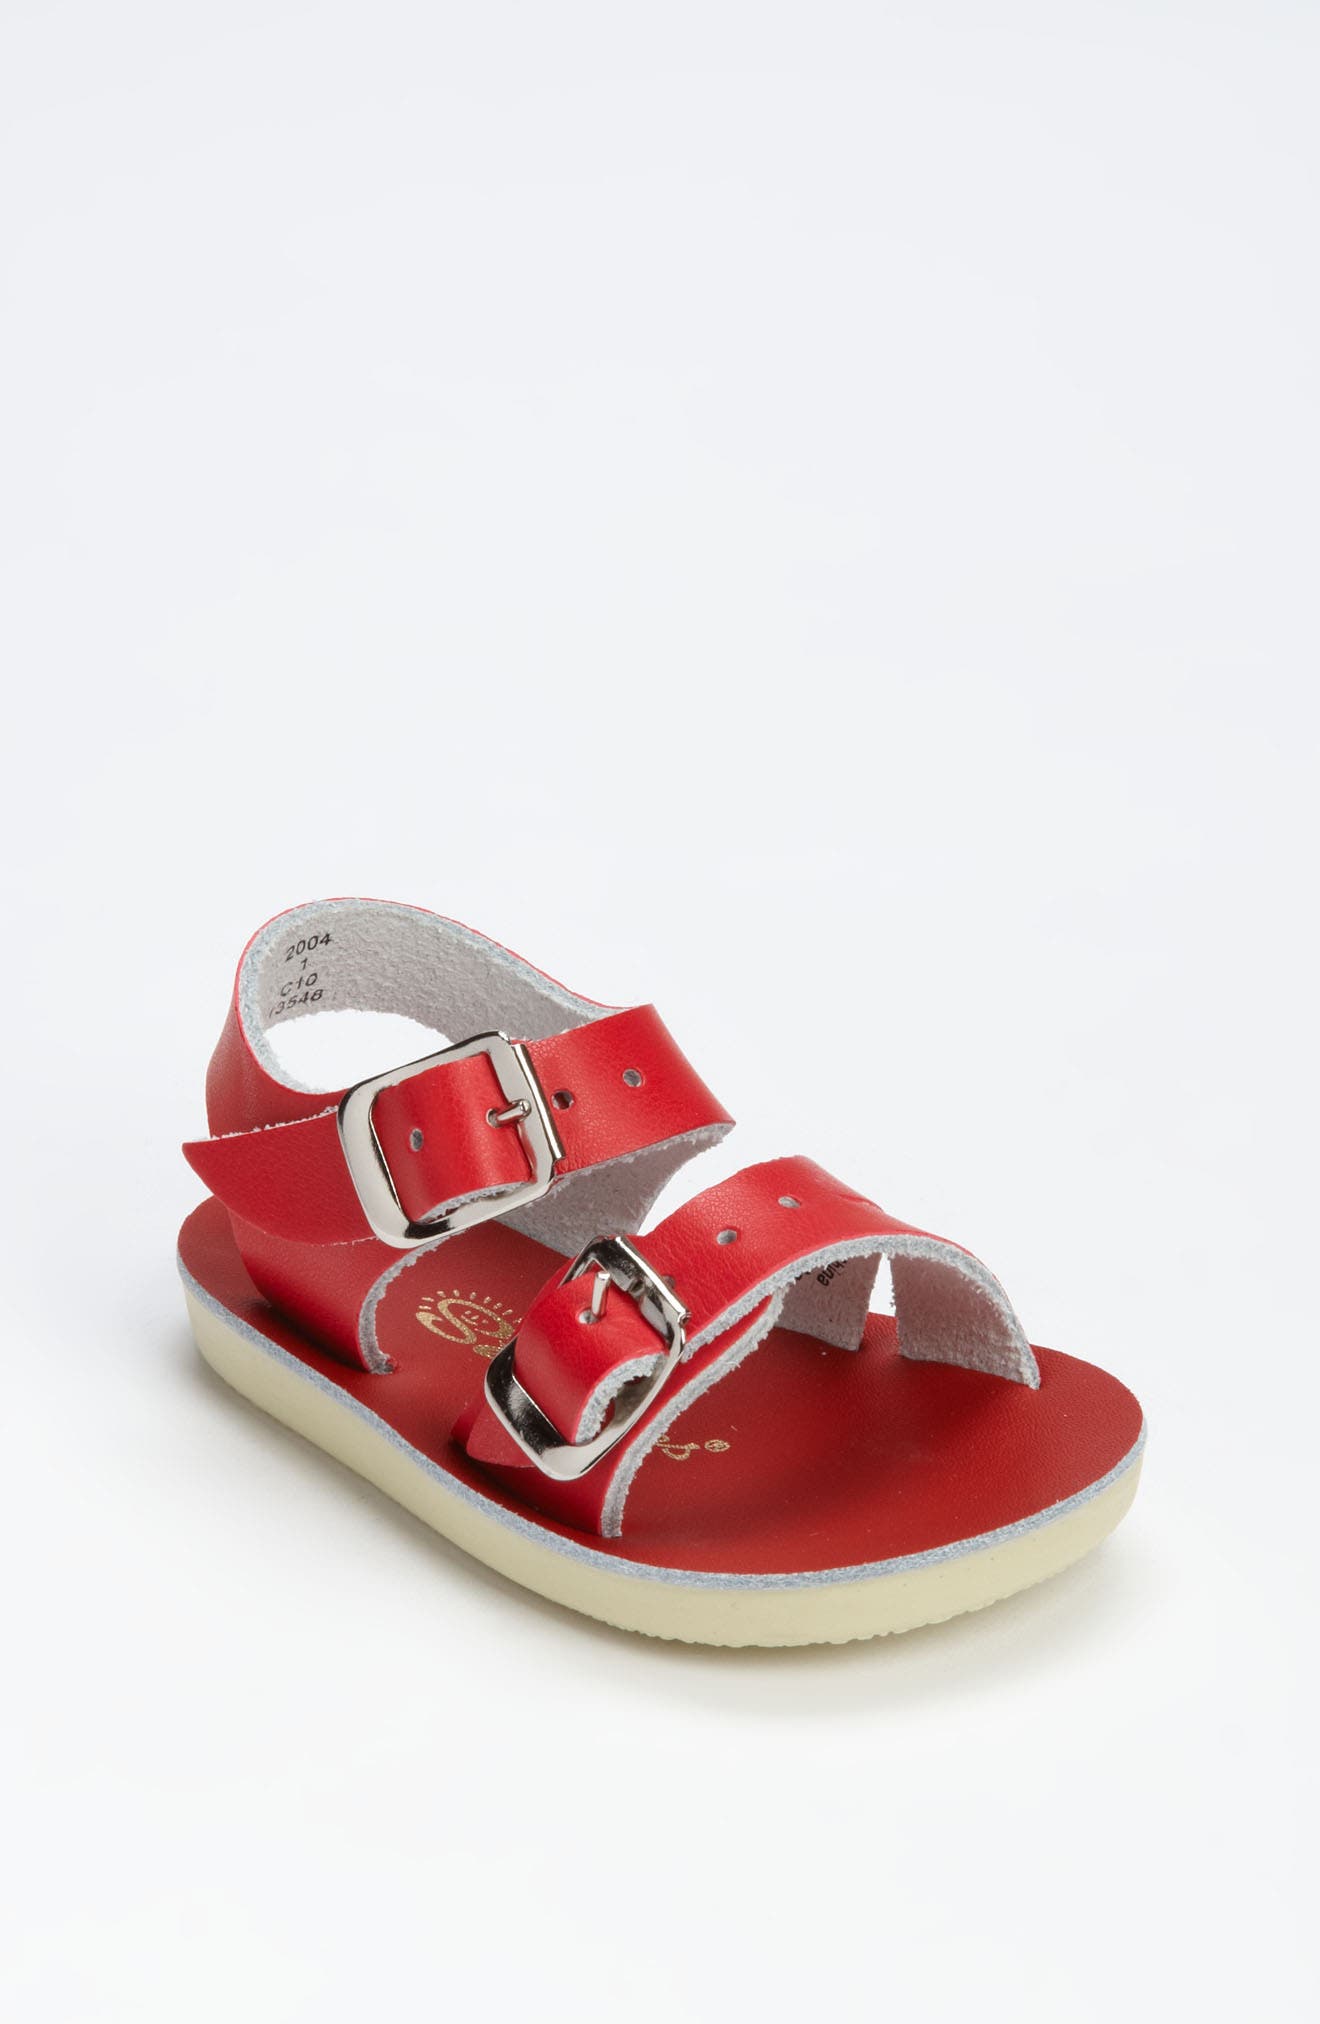 nordstrom baby sandals